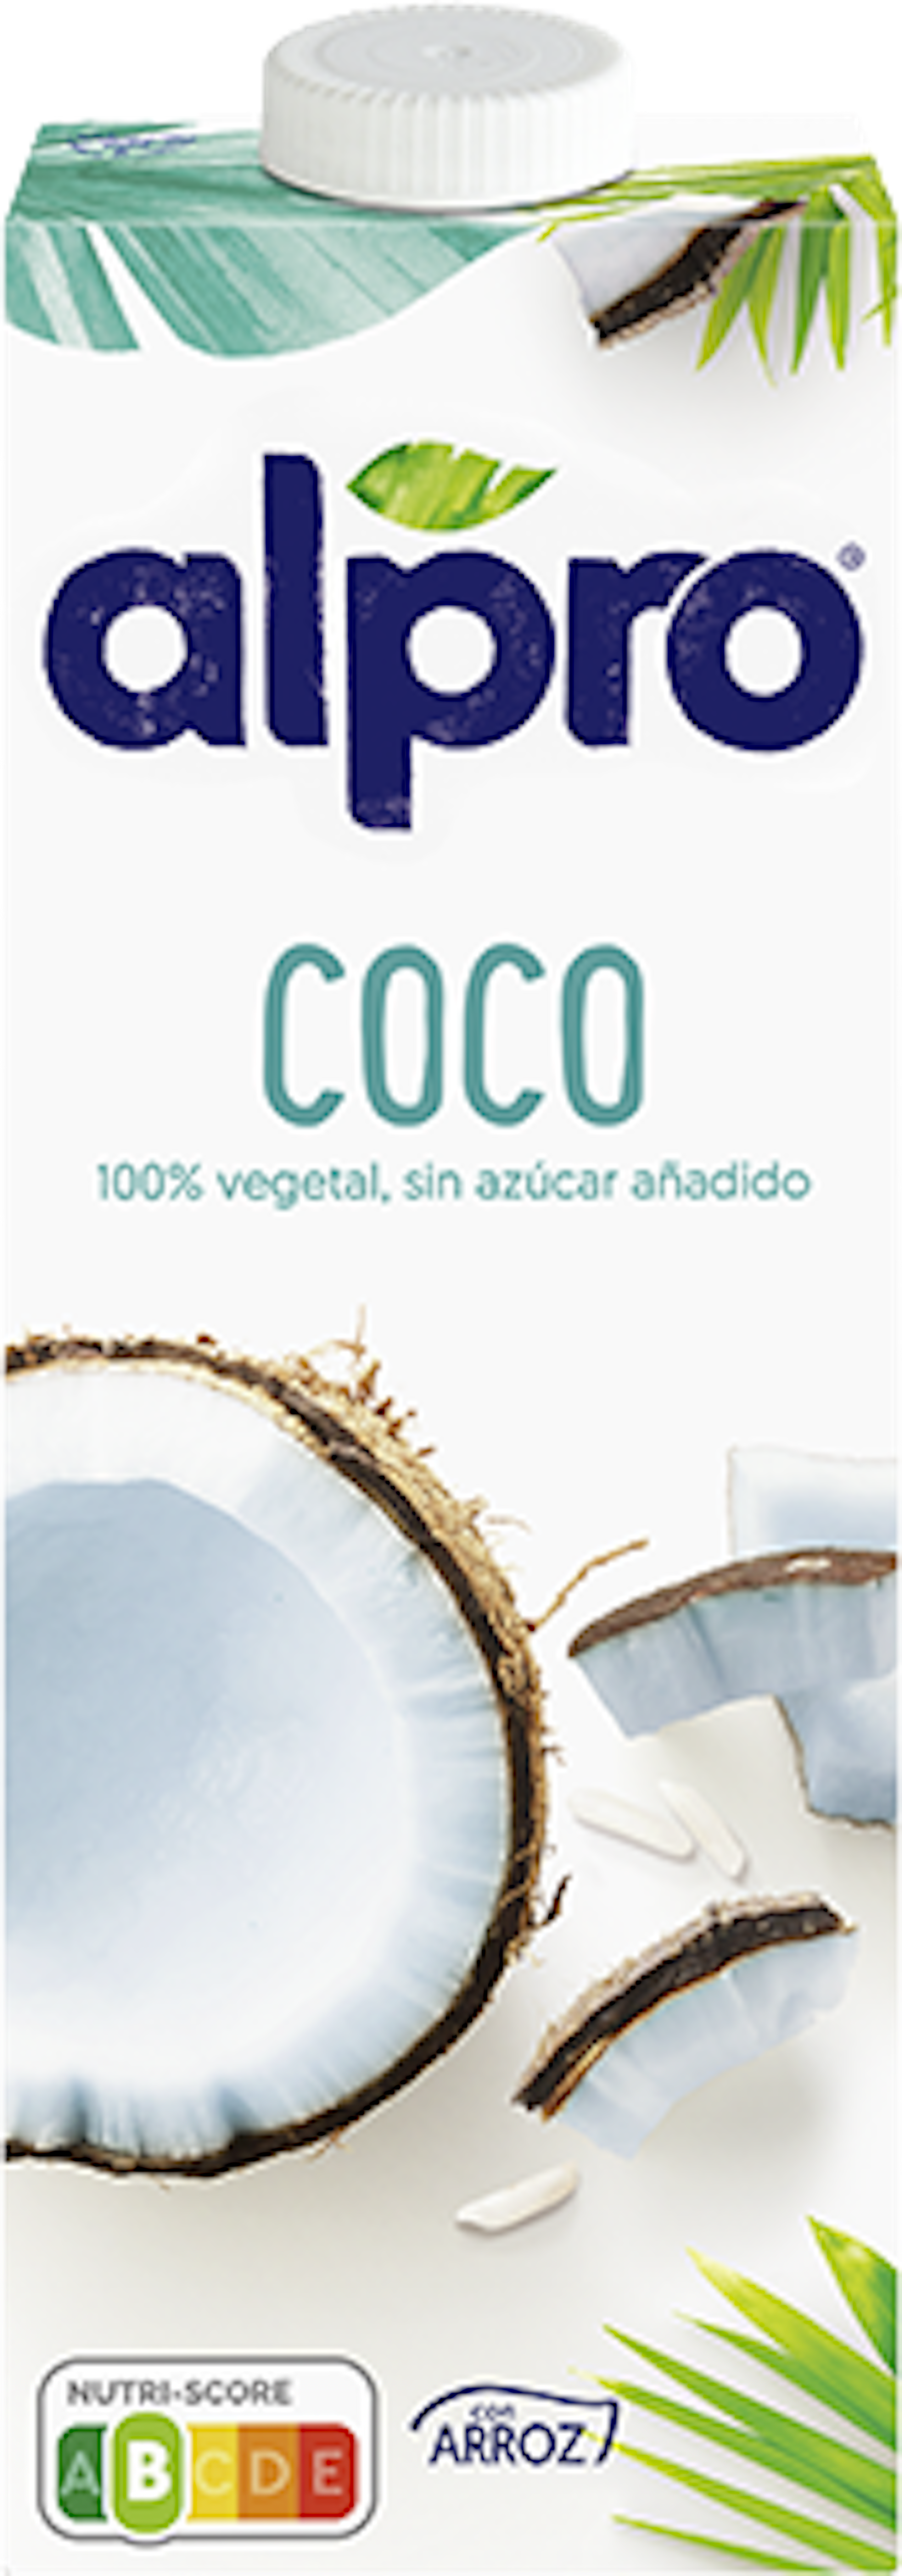 Coco Original